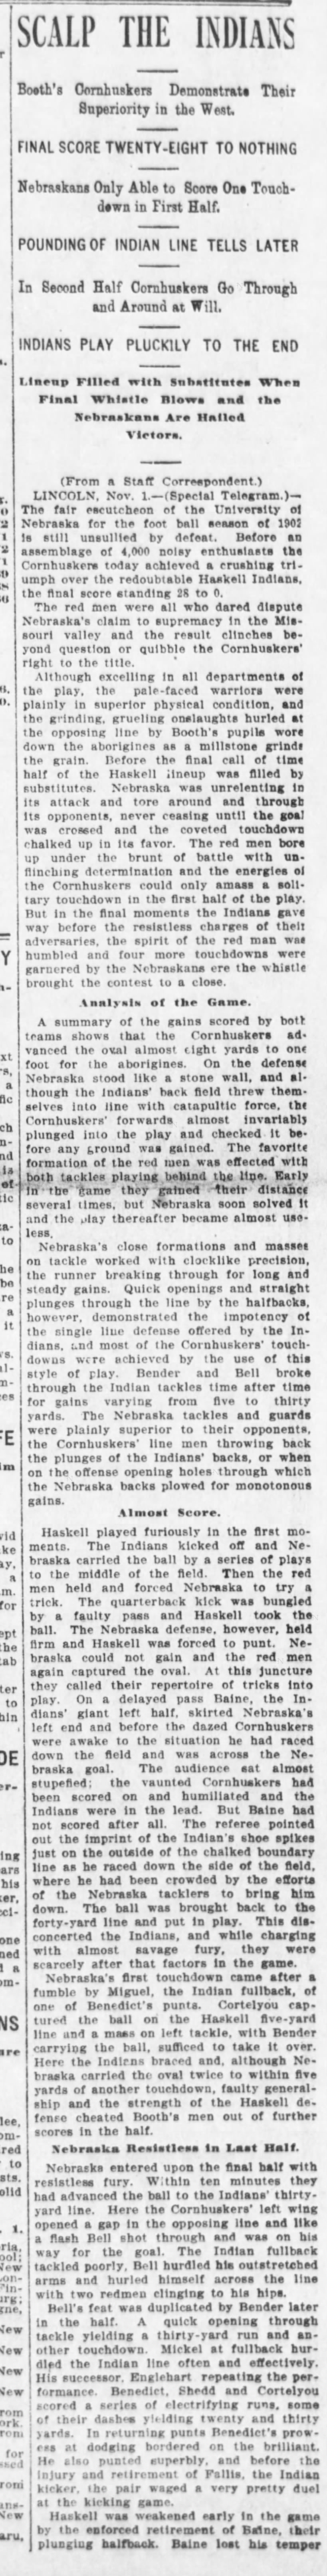 1902 Nebraska-Haskell part 1 Bee